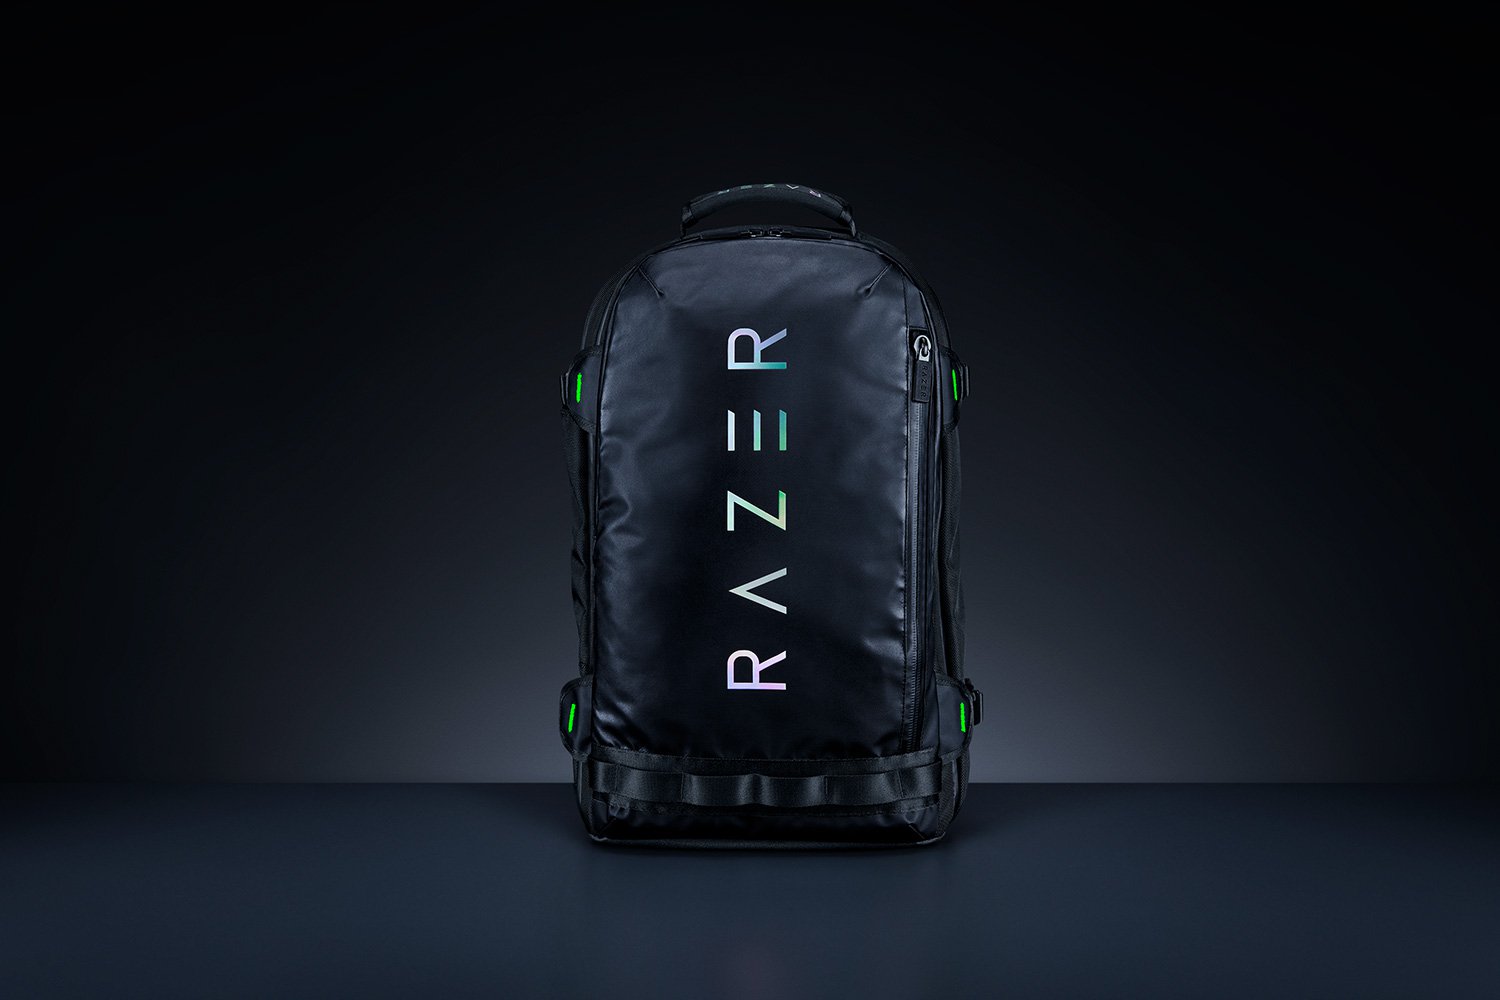 Razer Rogue 17 Backpack V3 - Chromatic